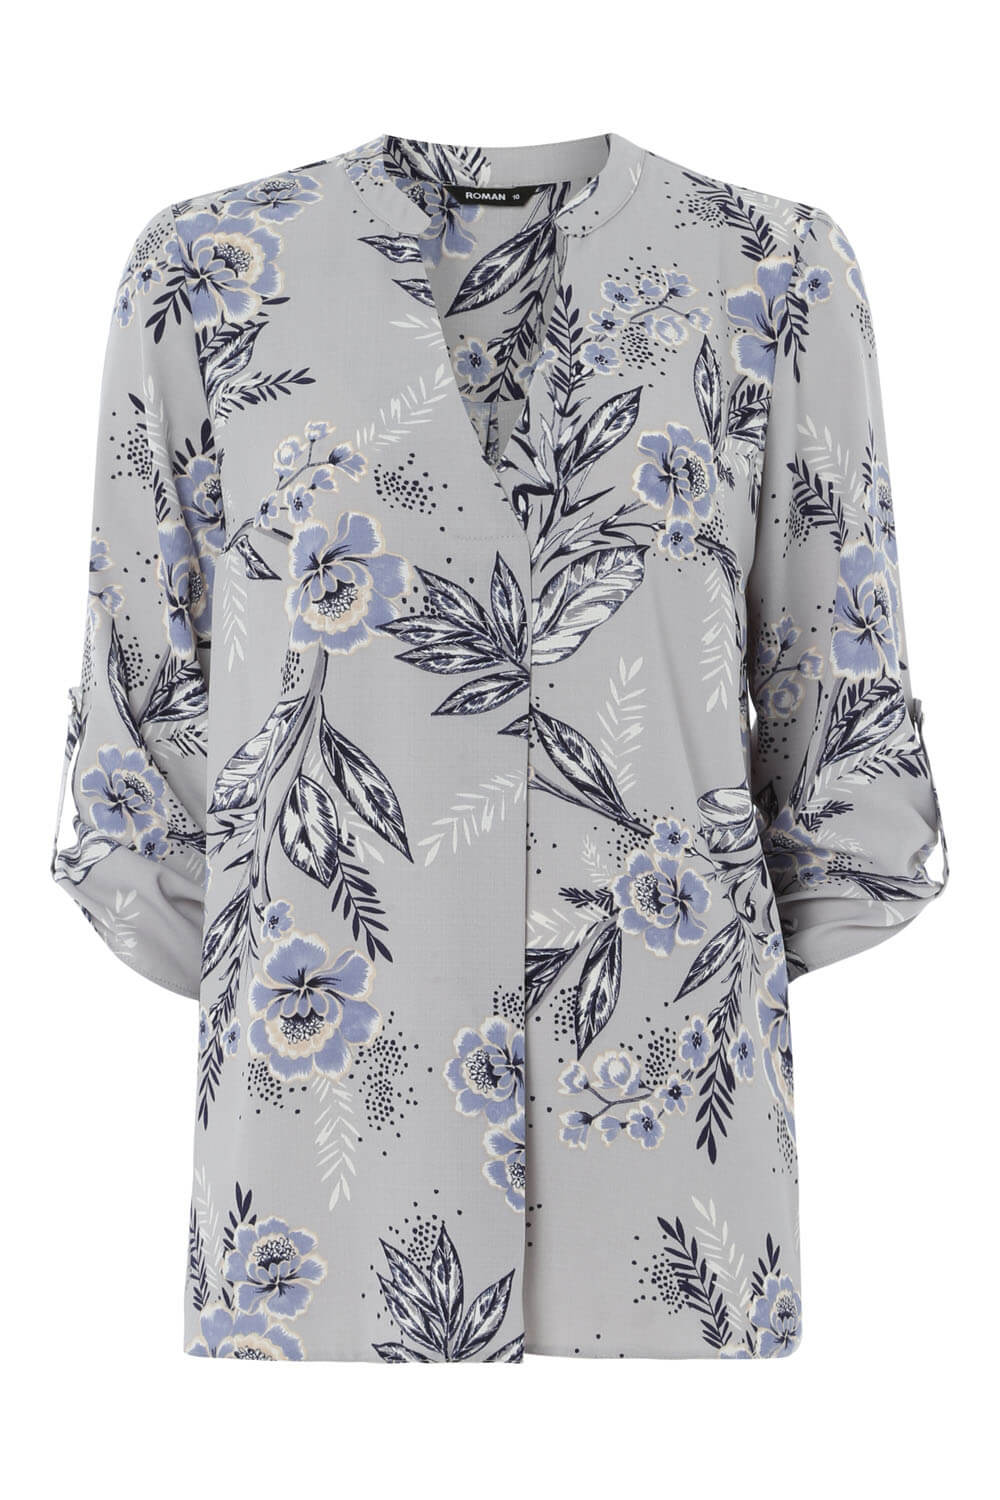 Floral Oversized Shirt in Light Blue - Roman Originals UK